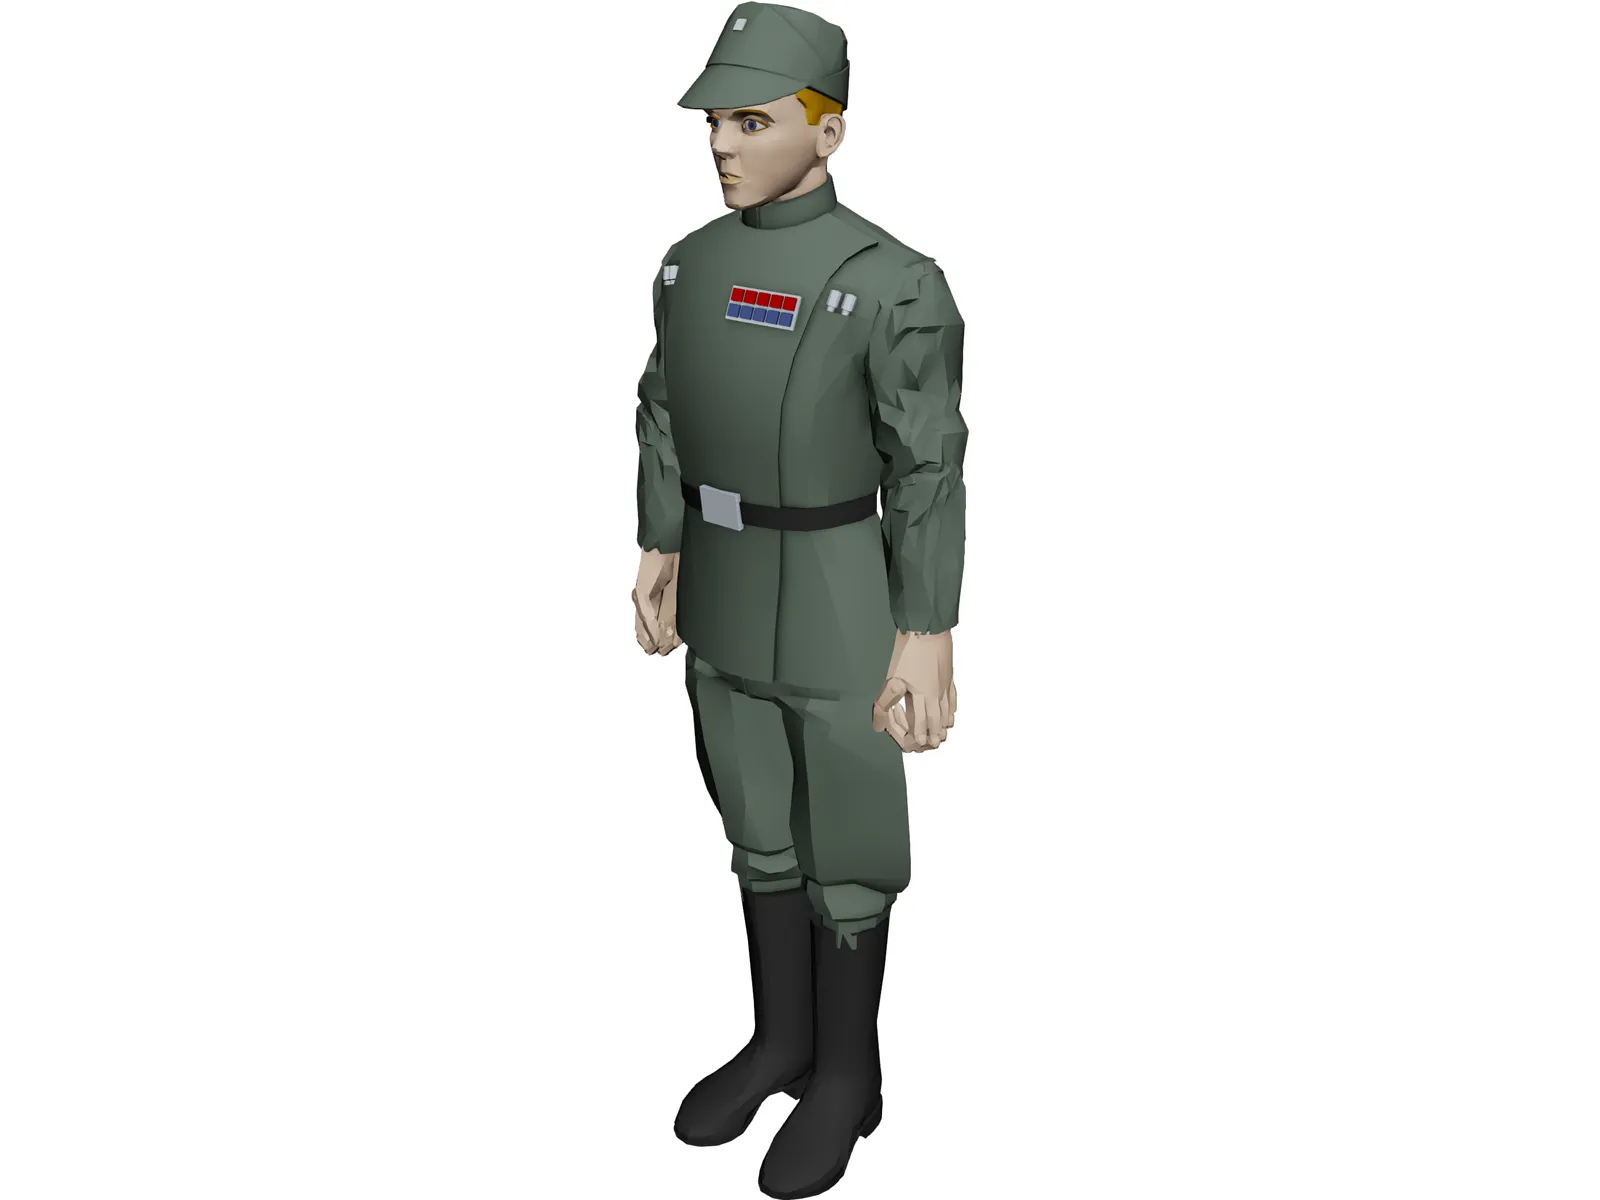 Star Wars Imperial Officer 3D Model